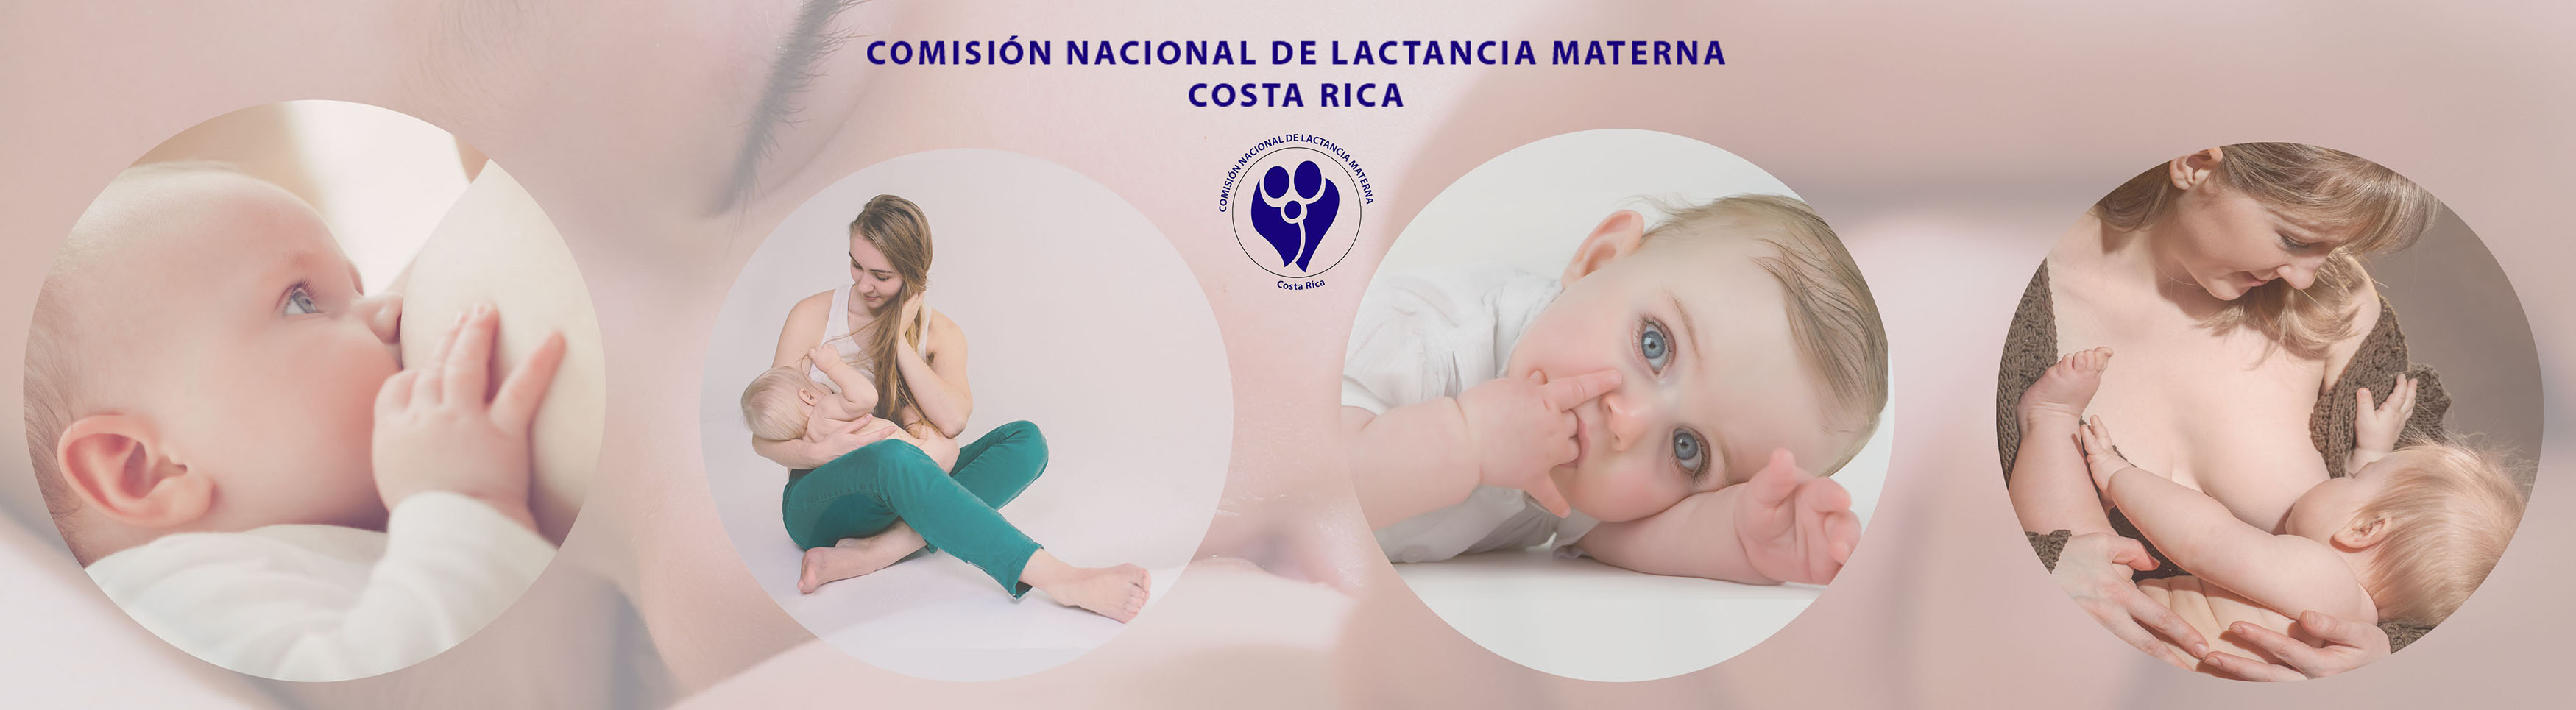 Banner Lactancia Materna